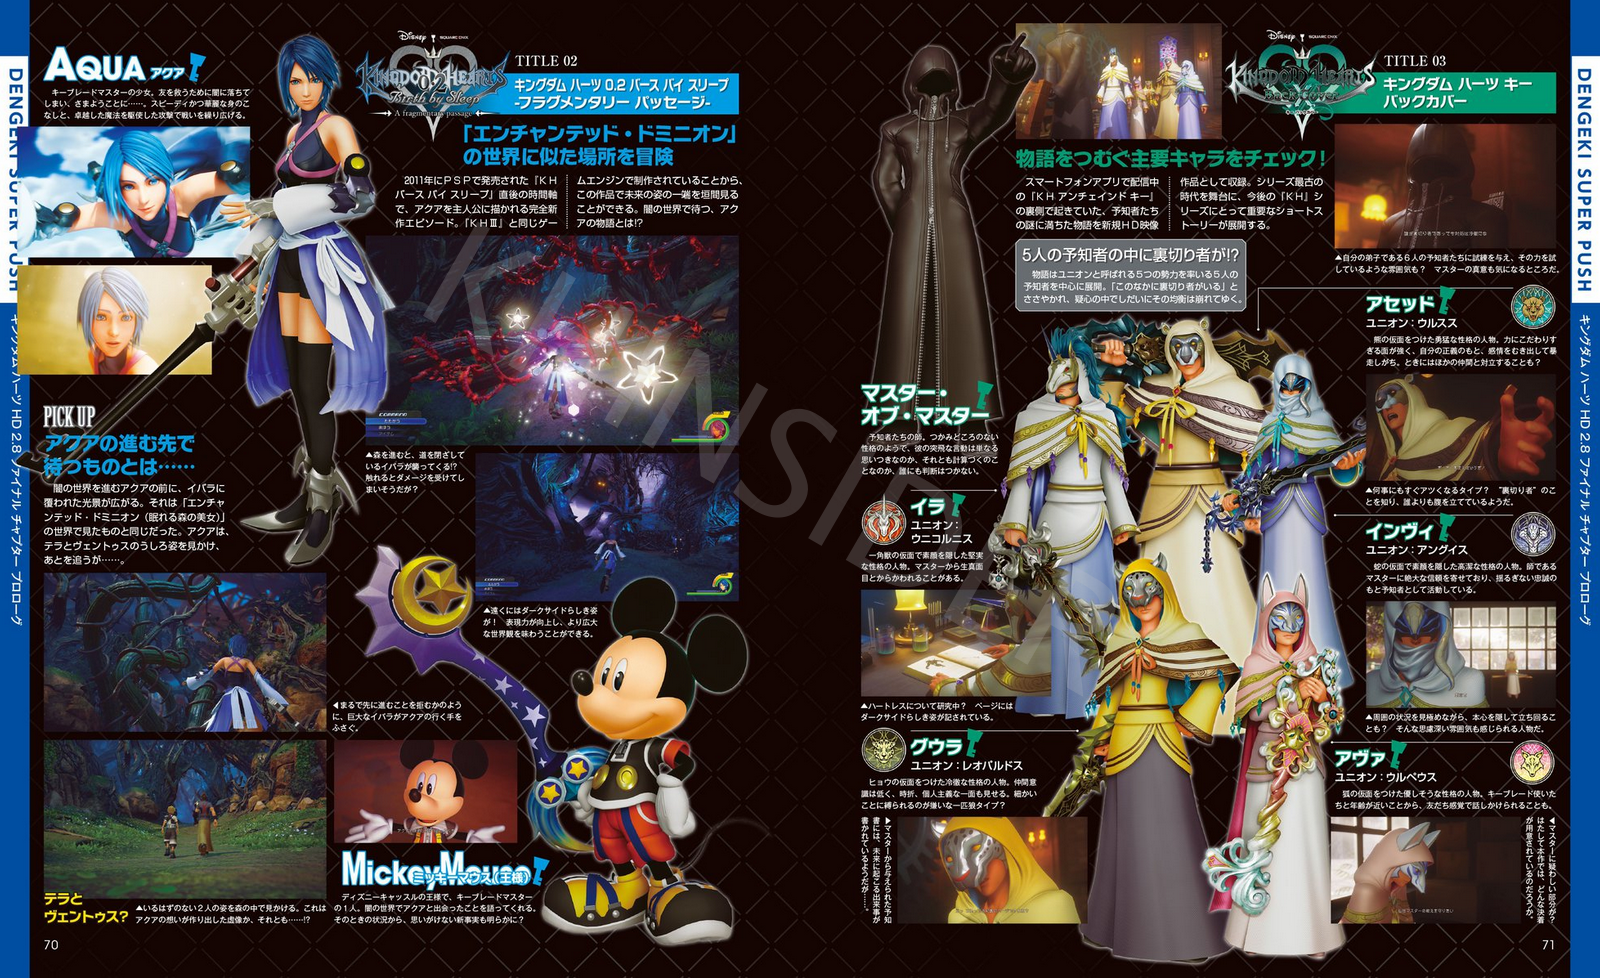 Dengeki Online Features Four Page Spread On Kingdom Hearts Hd 2 8 News Kingdom Hearts Insider